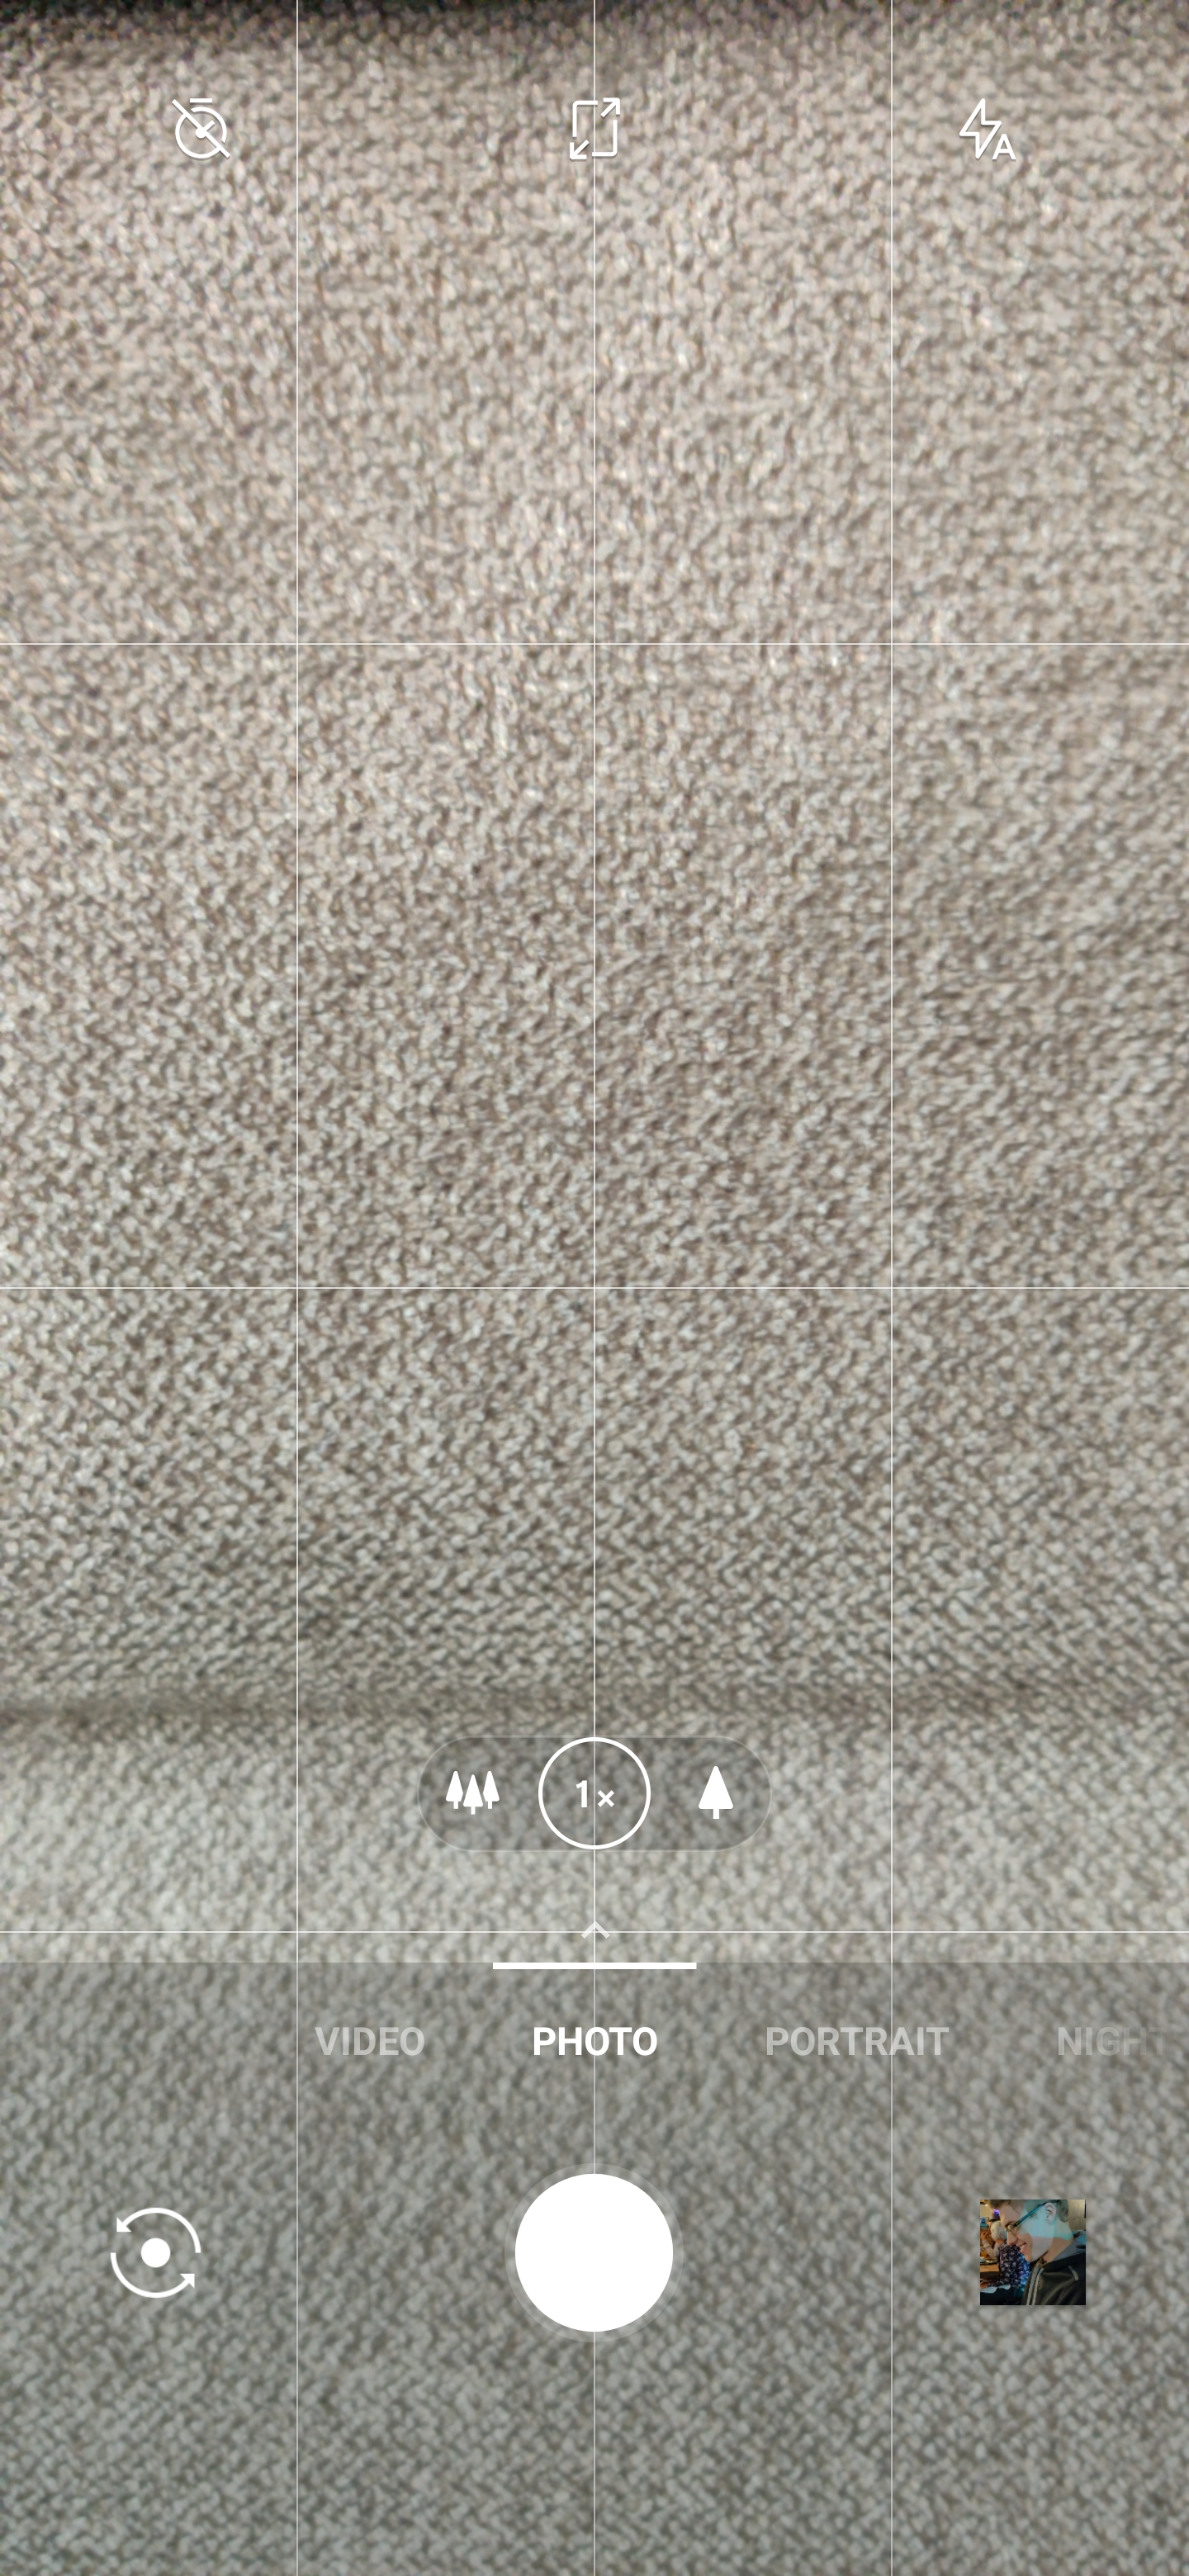 OnePlus 7 Pro camera app 1